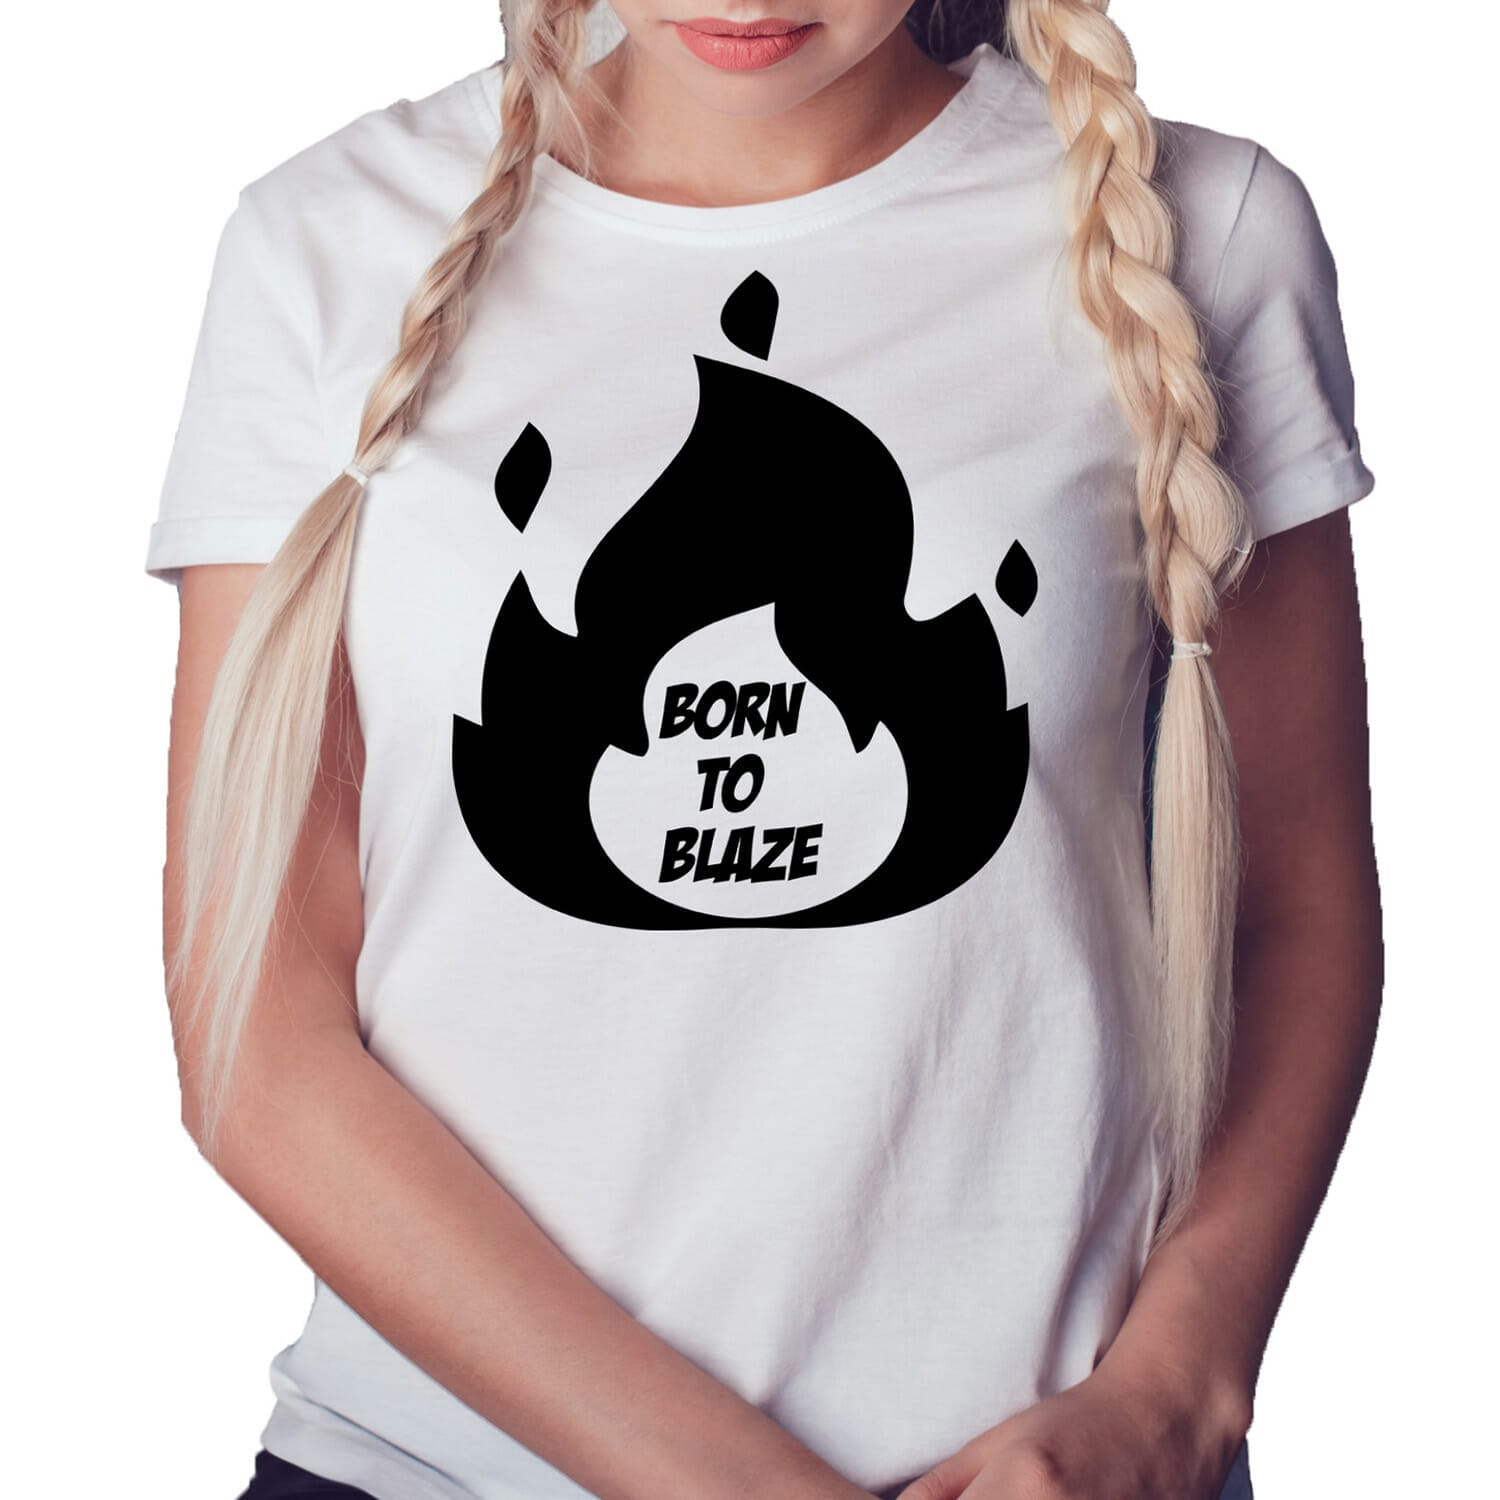 Born to blaze Tshirt Design